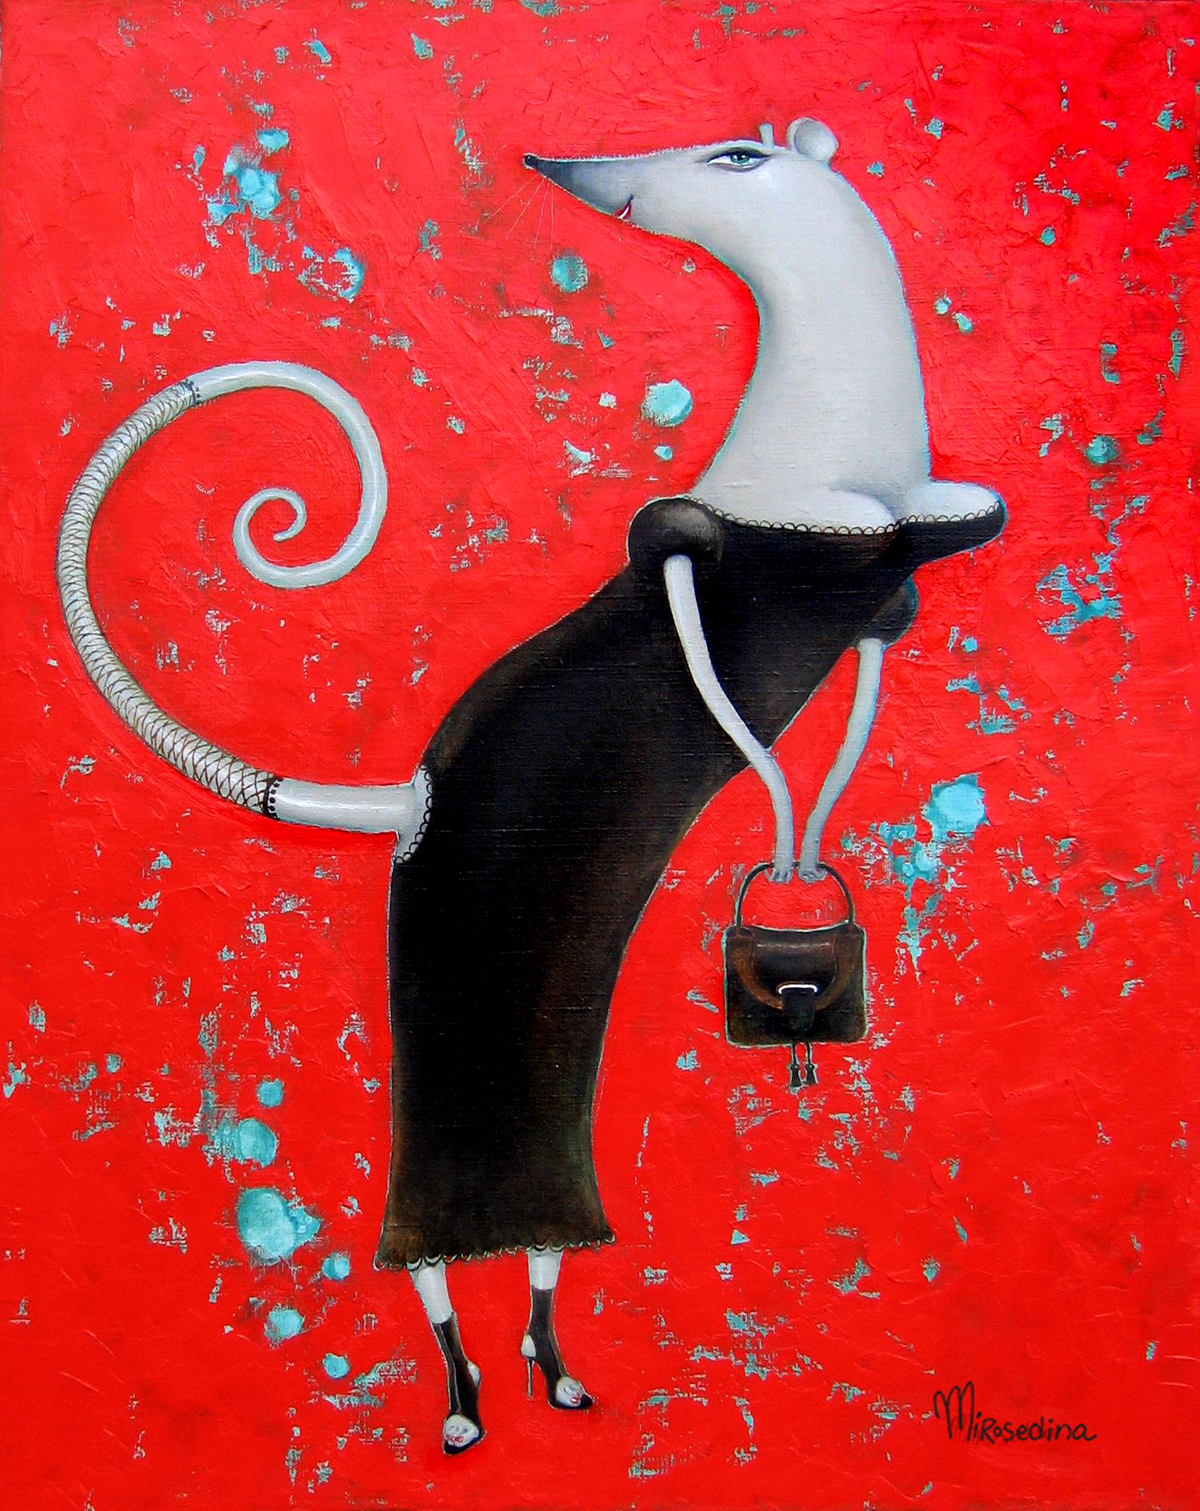 rat mirosedina art year of Rat mouse крыса мышка мироседина зверюшки пушистые звери мимими mikki micki